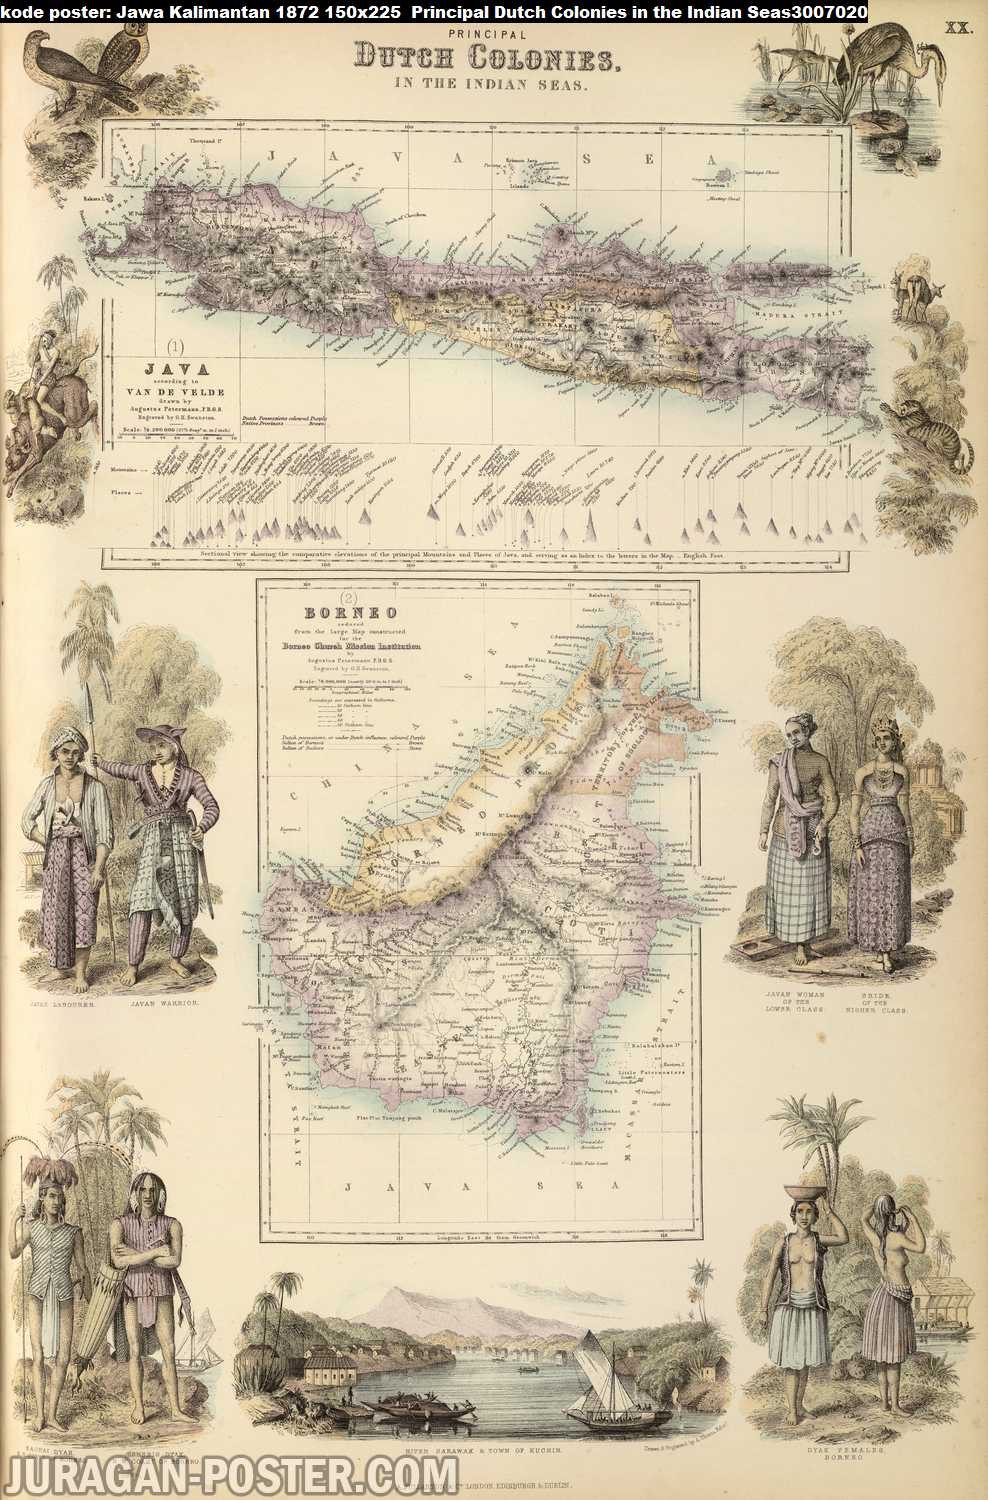 Peta Jawa Kalimantan Kuno 1872 Principal Dutch Colonies in the Indian Seas3007020